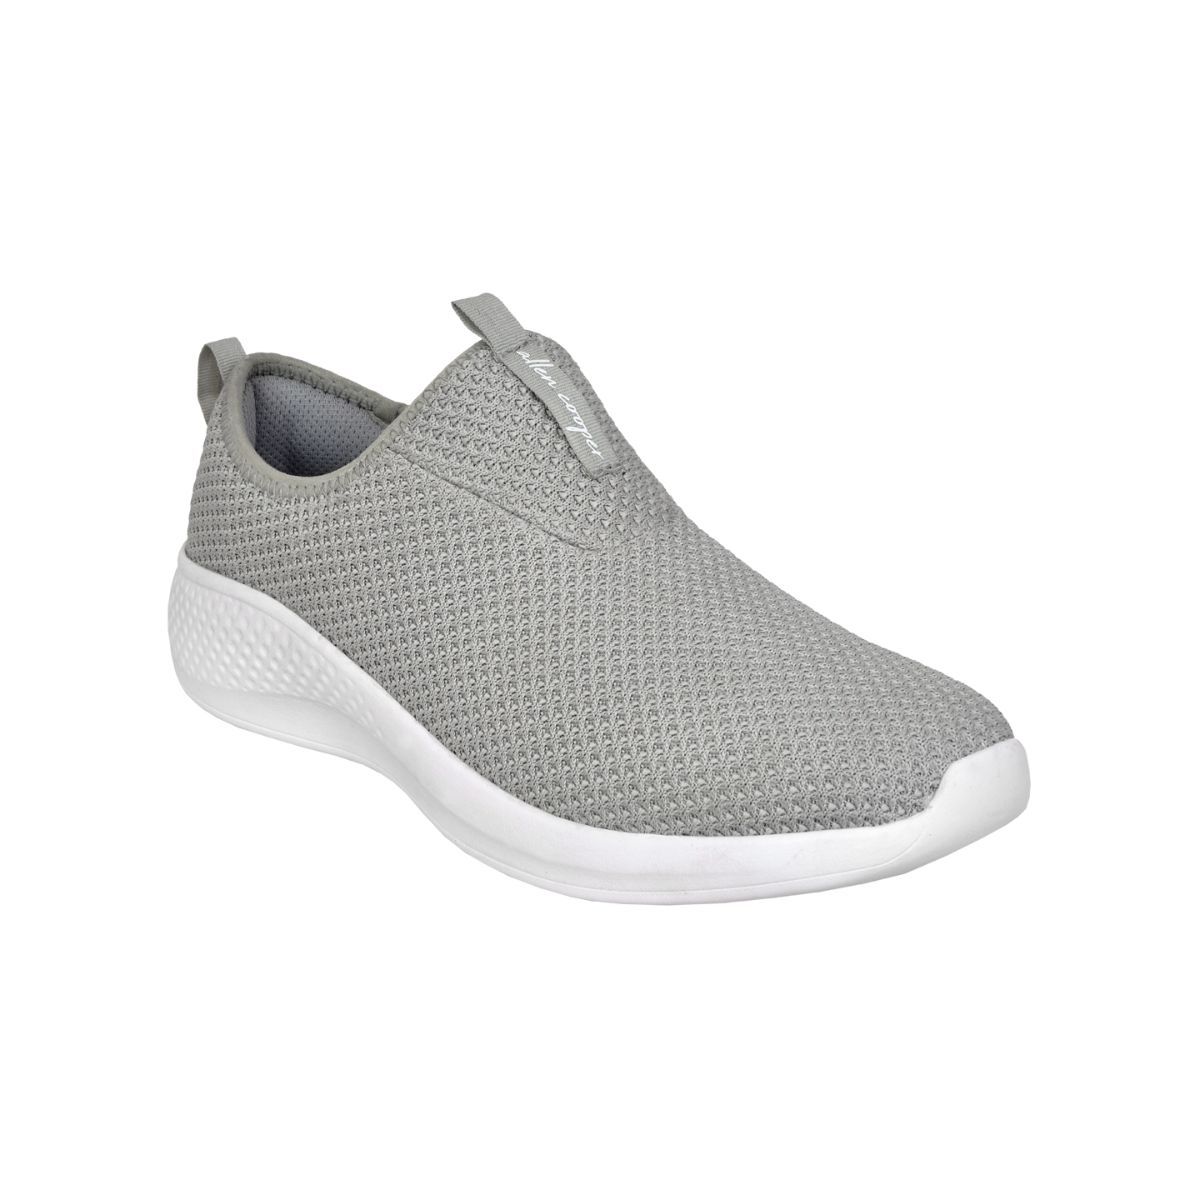 Allen Cooper Grey Sports Shoes For Men - 9